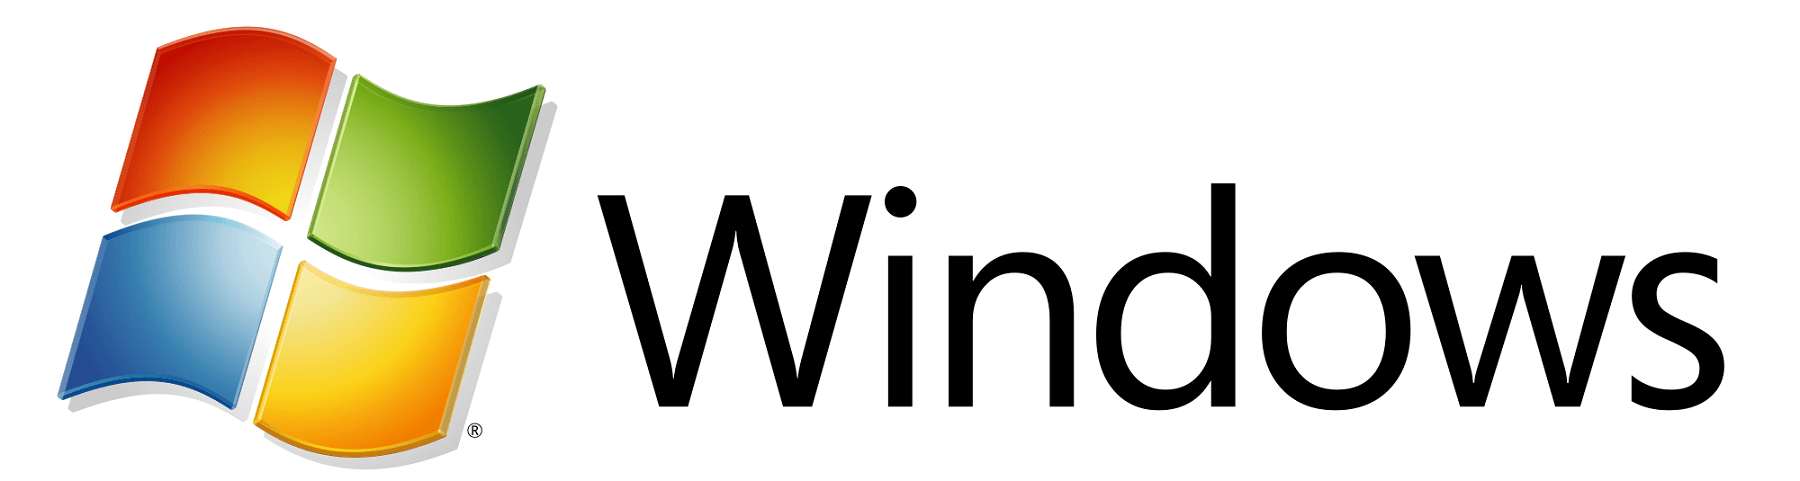 All Microsoft Windows Logo - Microsoft Windows Logo PNG Transparent Microsoft Windows Logo.PNG ...